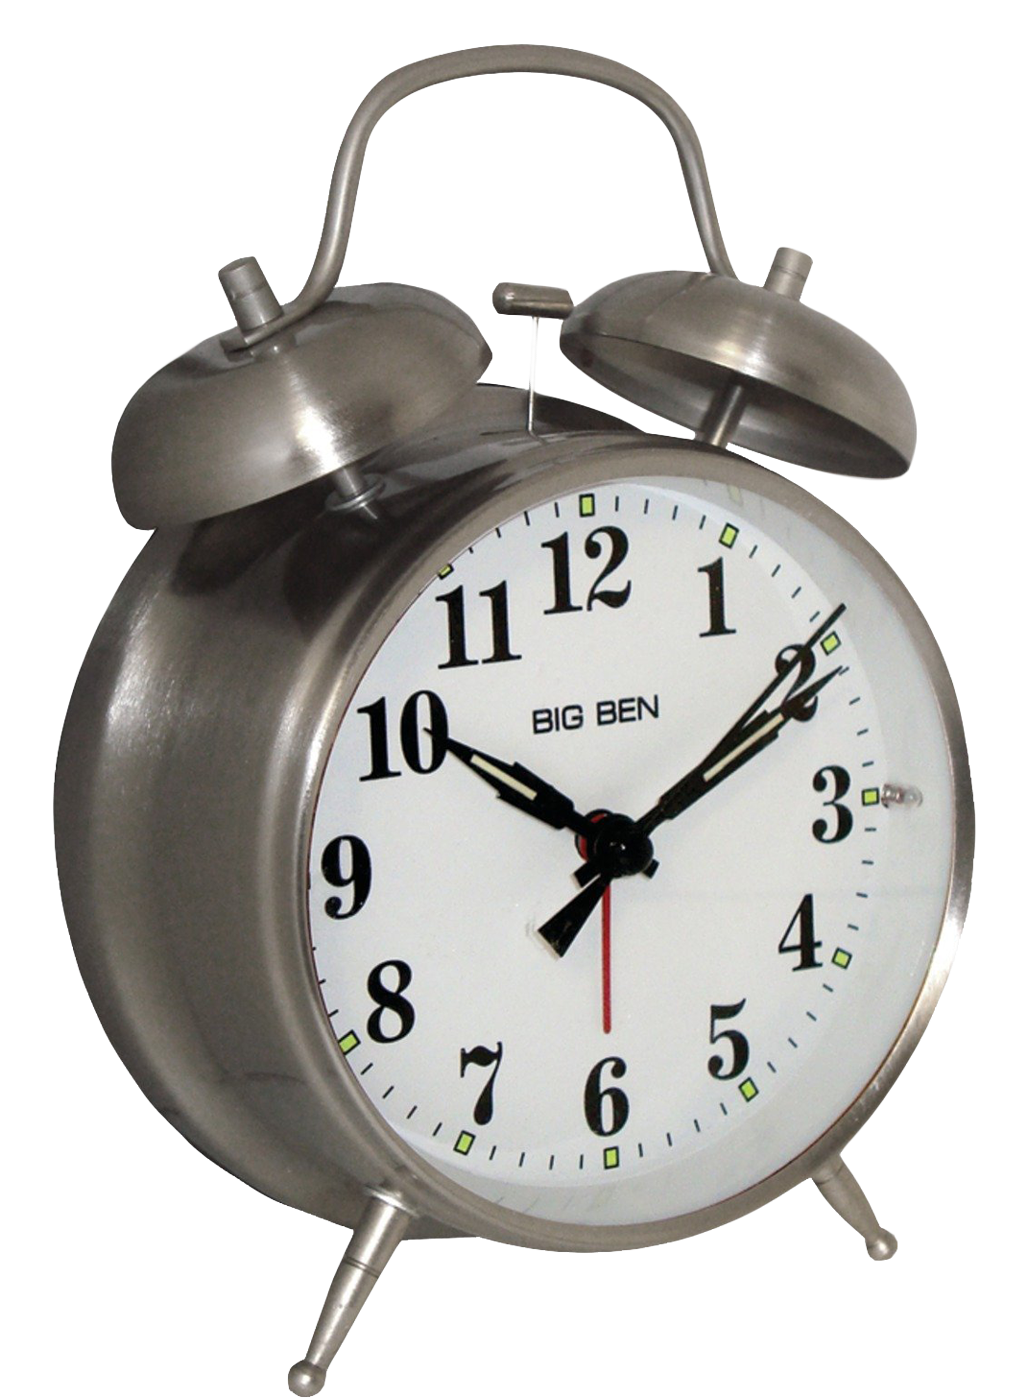 Alarm Clock PNG Photo